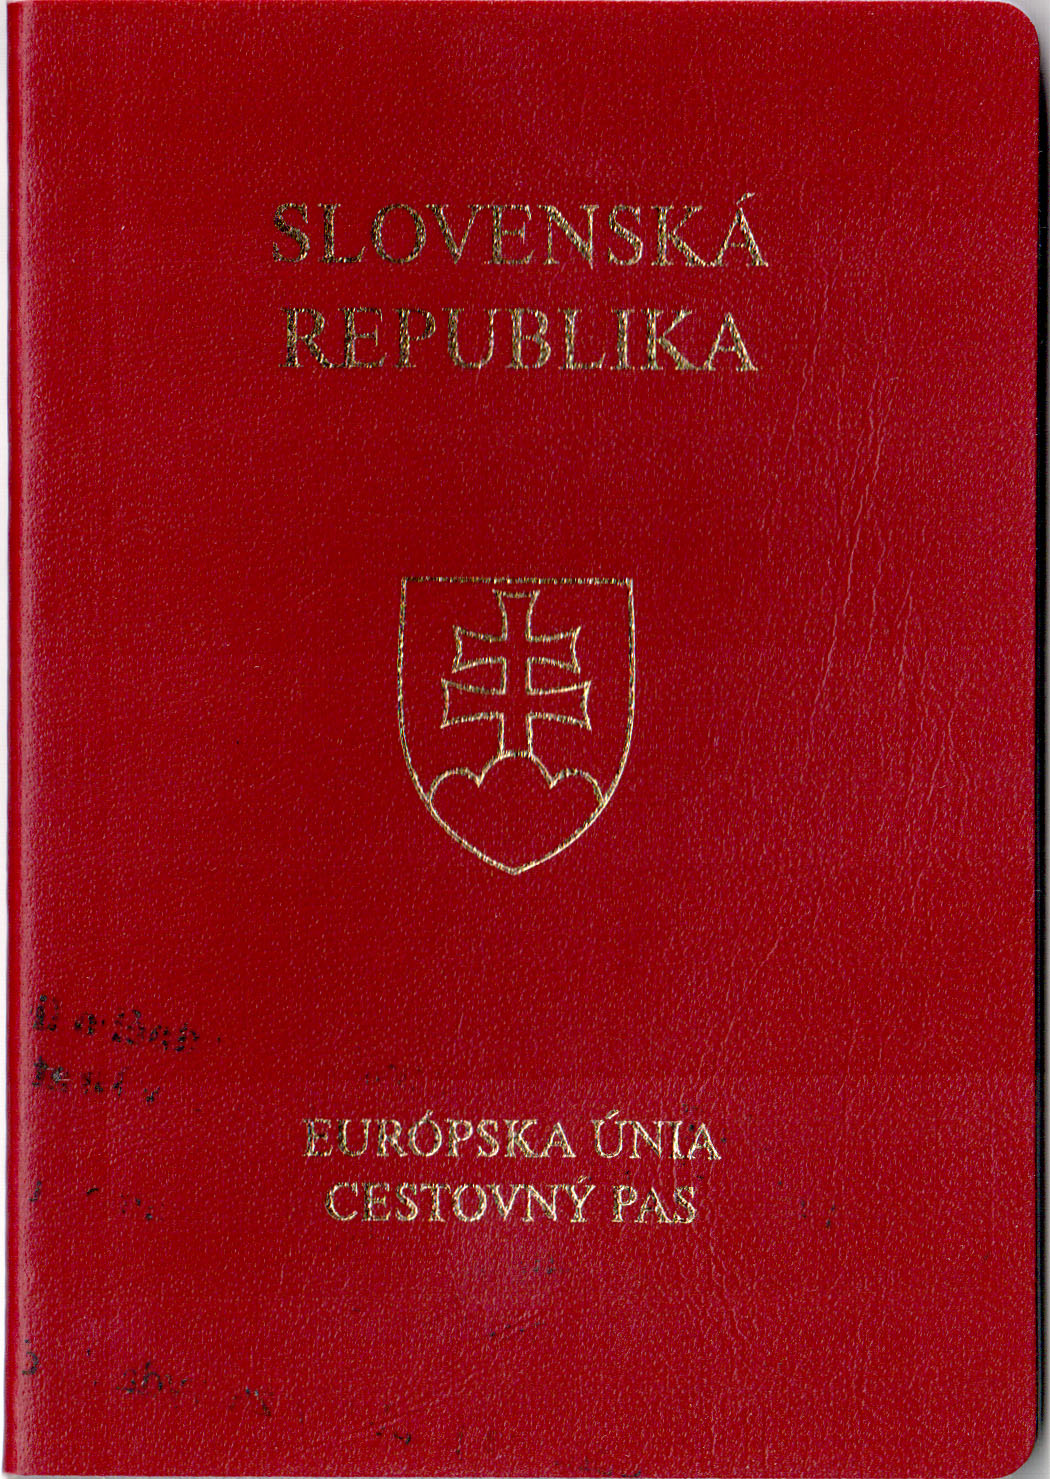 Slovak passport